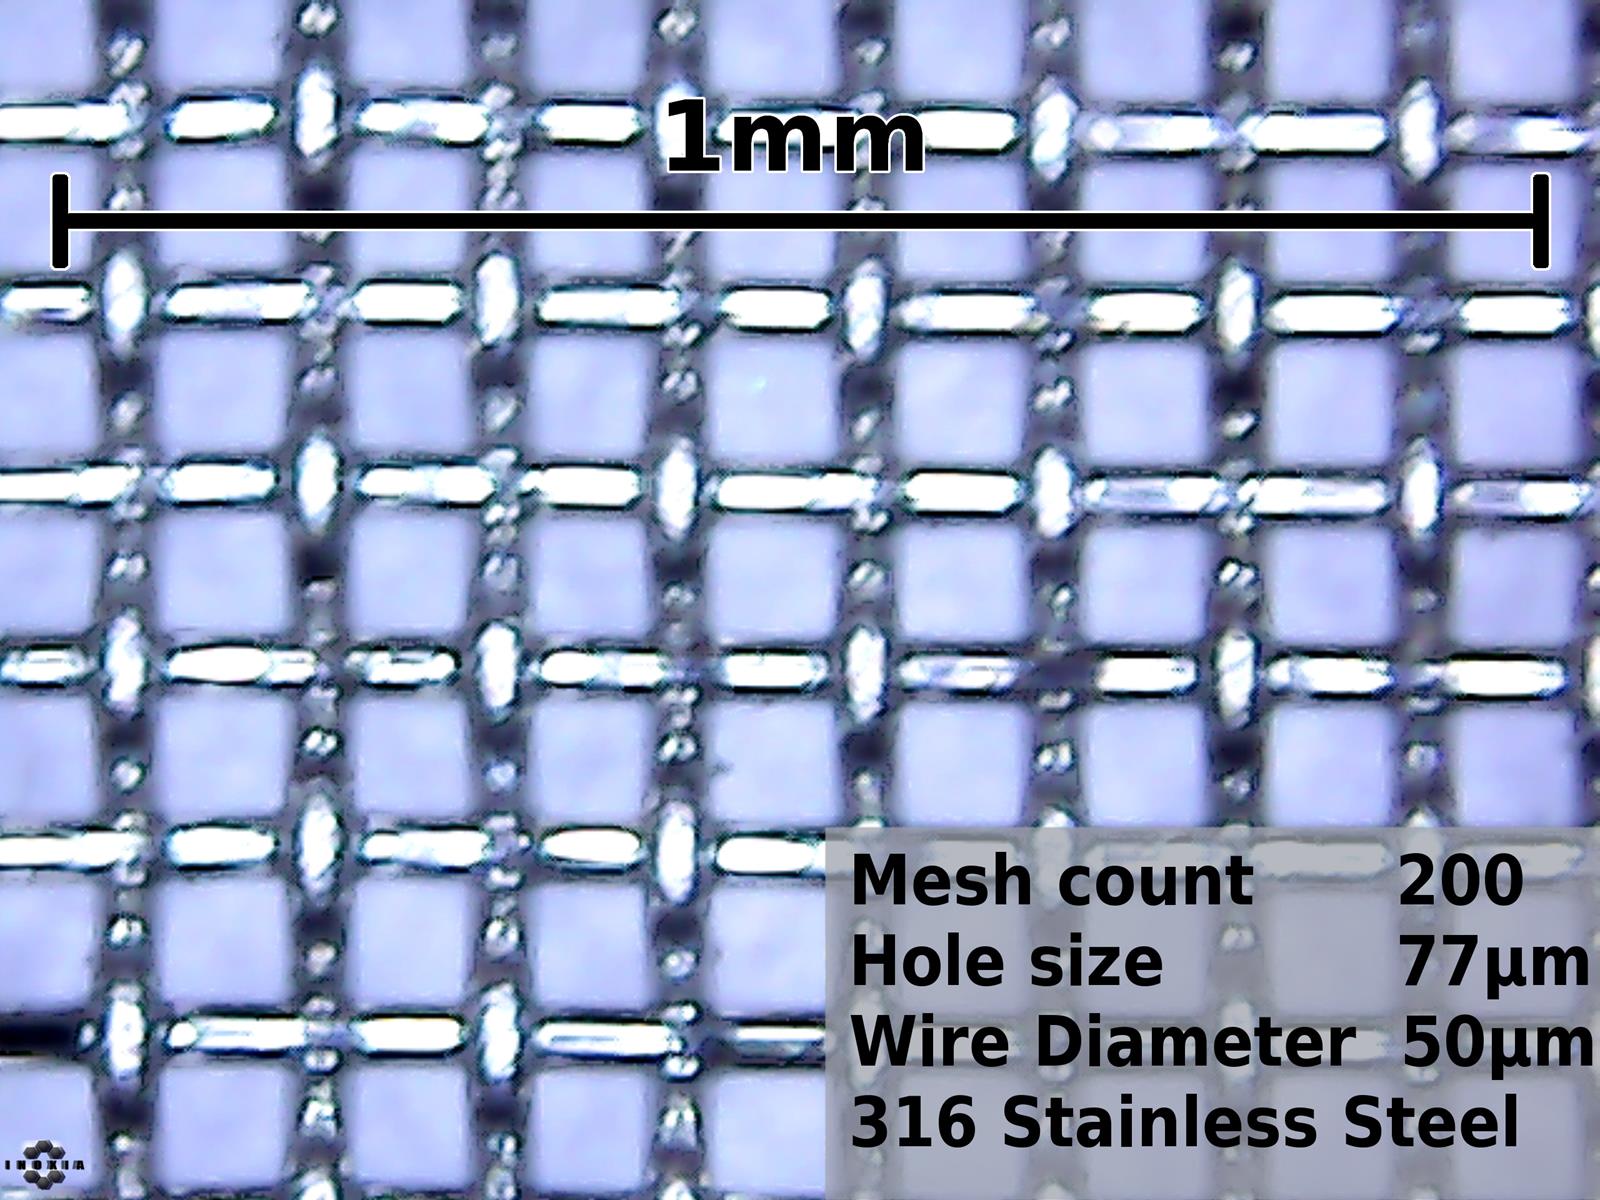 12 Width 64 microns Mesh Size Opaque Off-White 45% Open Area Nylon 6/6 Woven Mesh Sheet 12 Length 